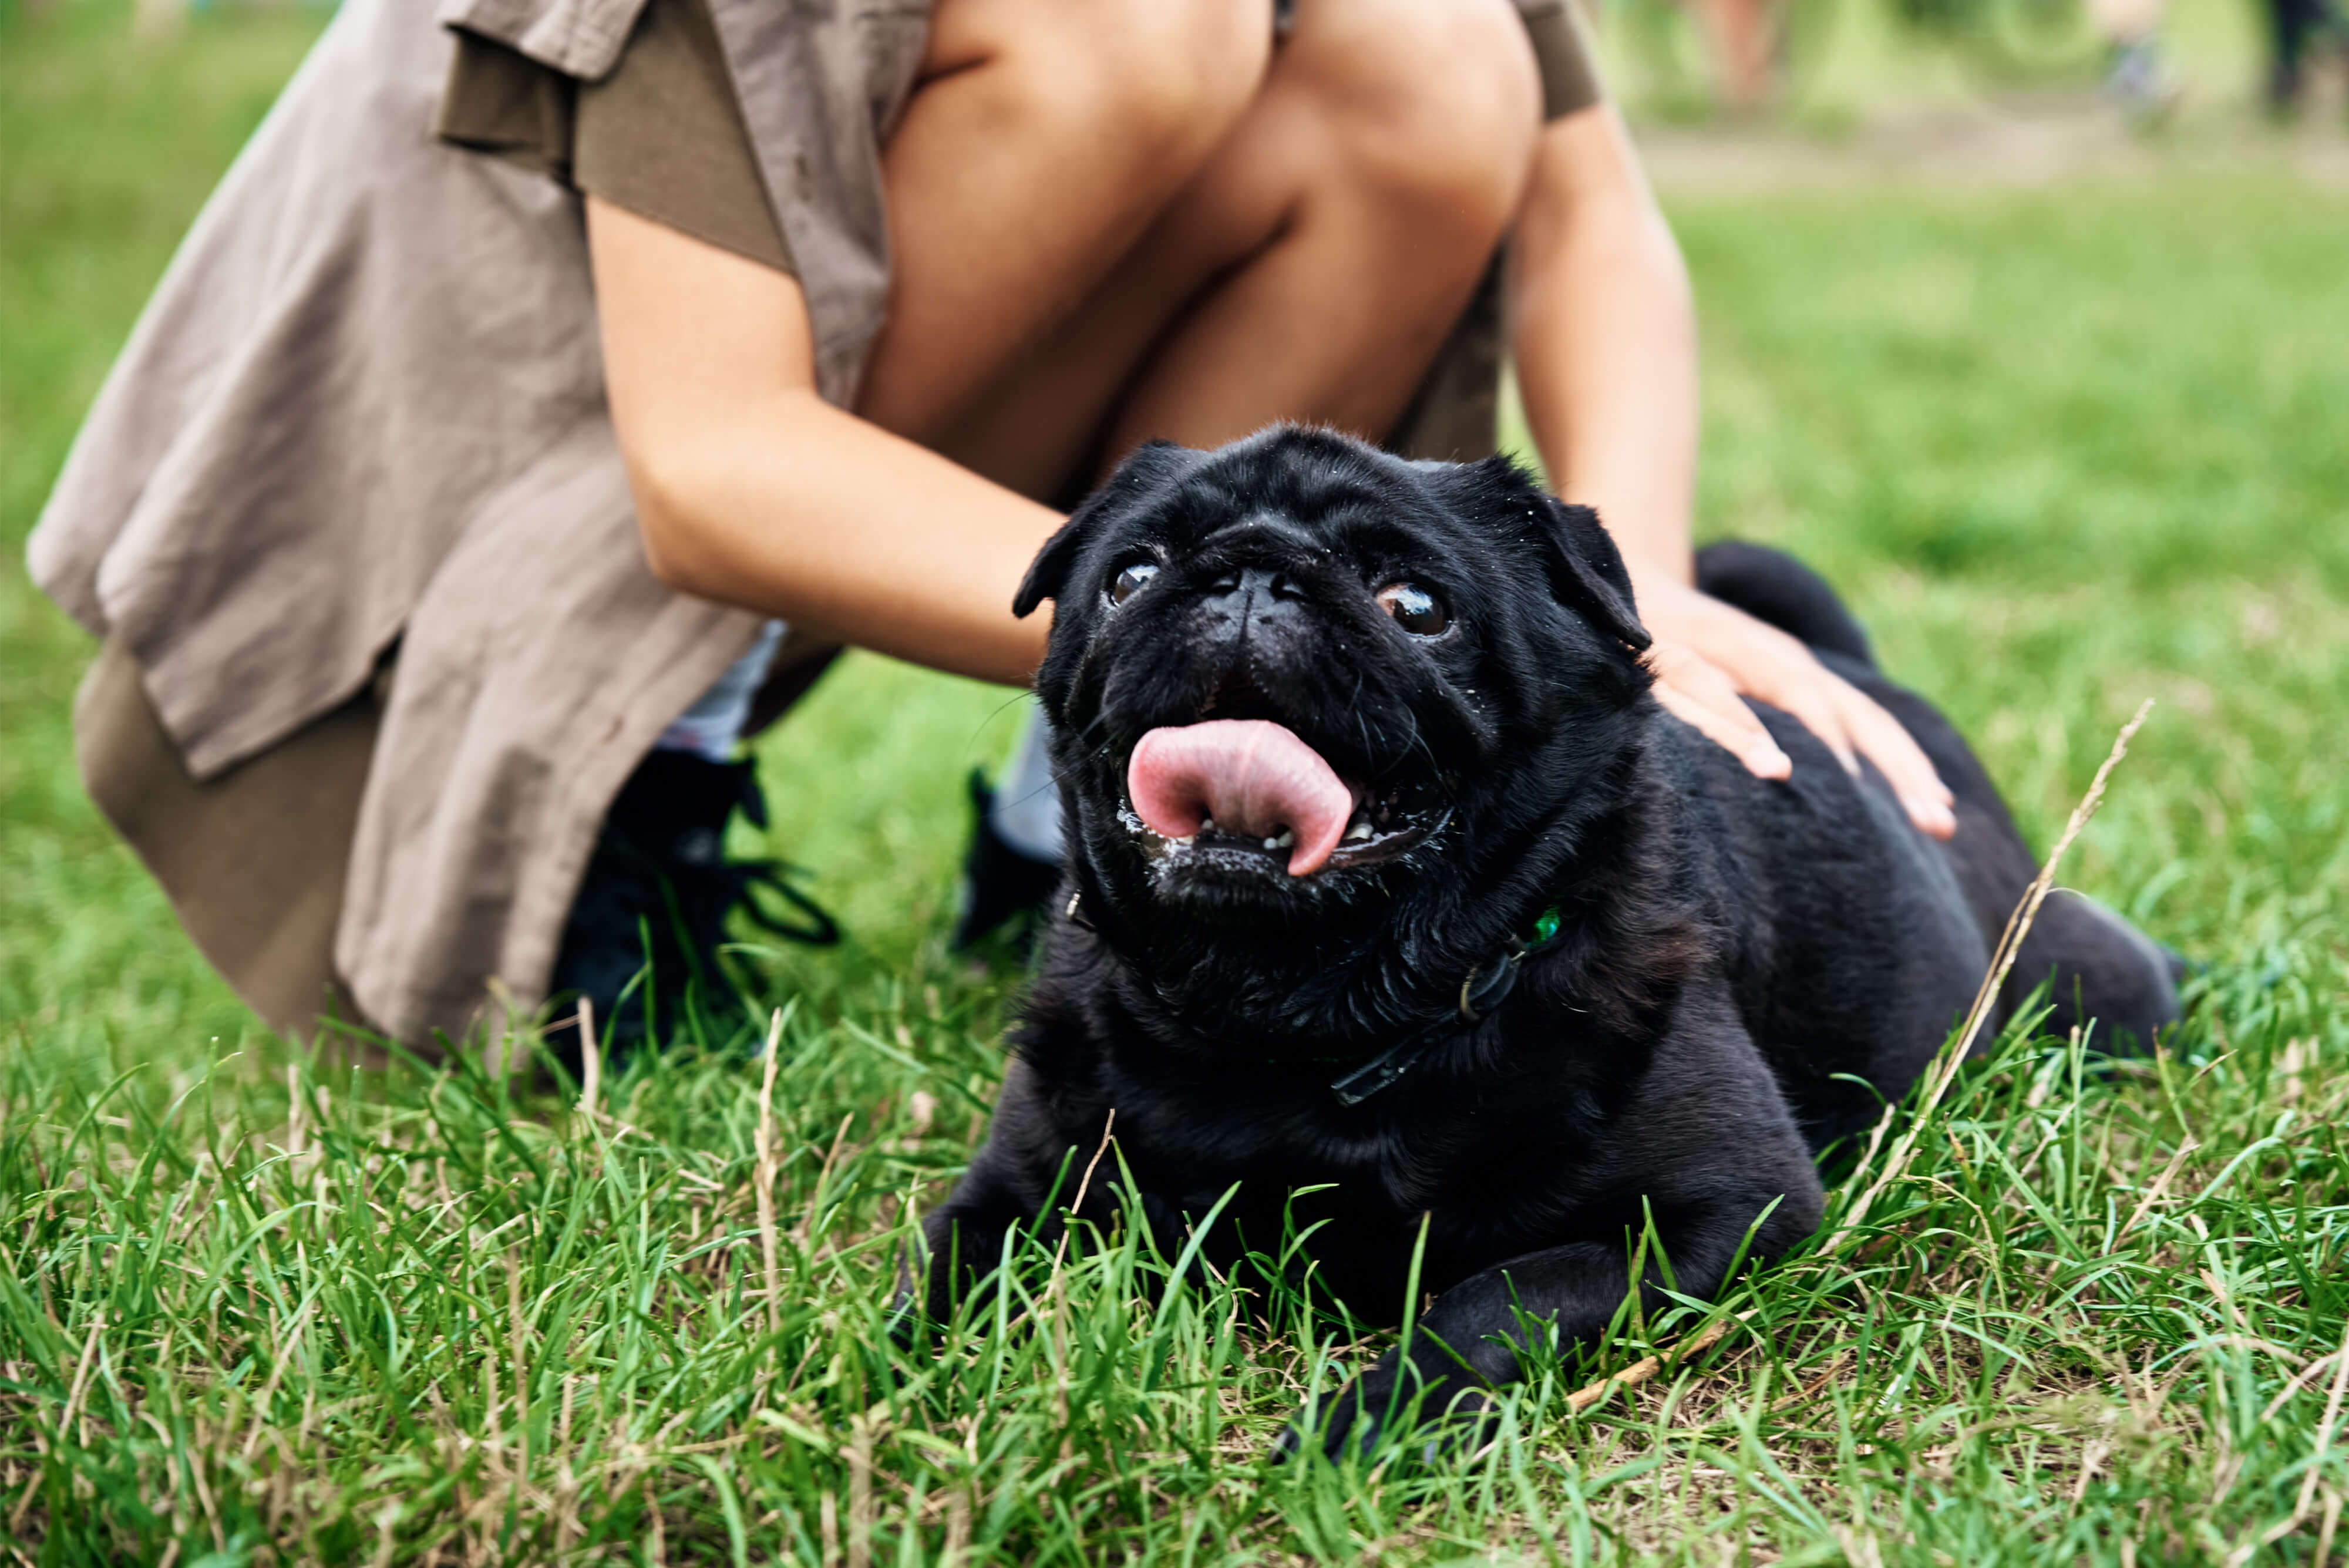 owner-petting-pug-dog-on-grass-2022-10-31-22-59-37-utc (1)